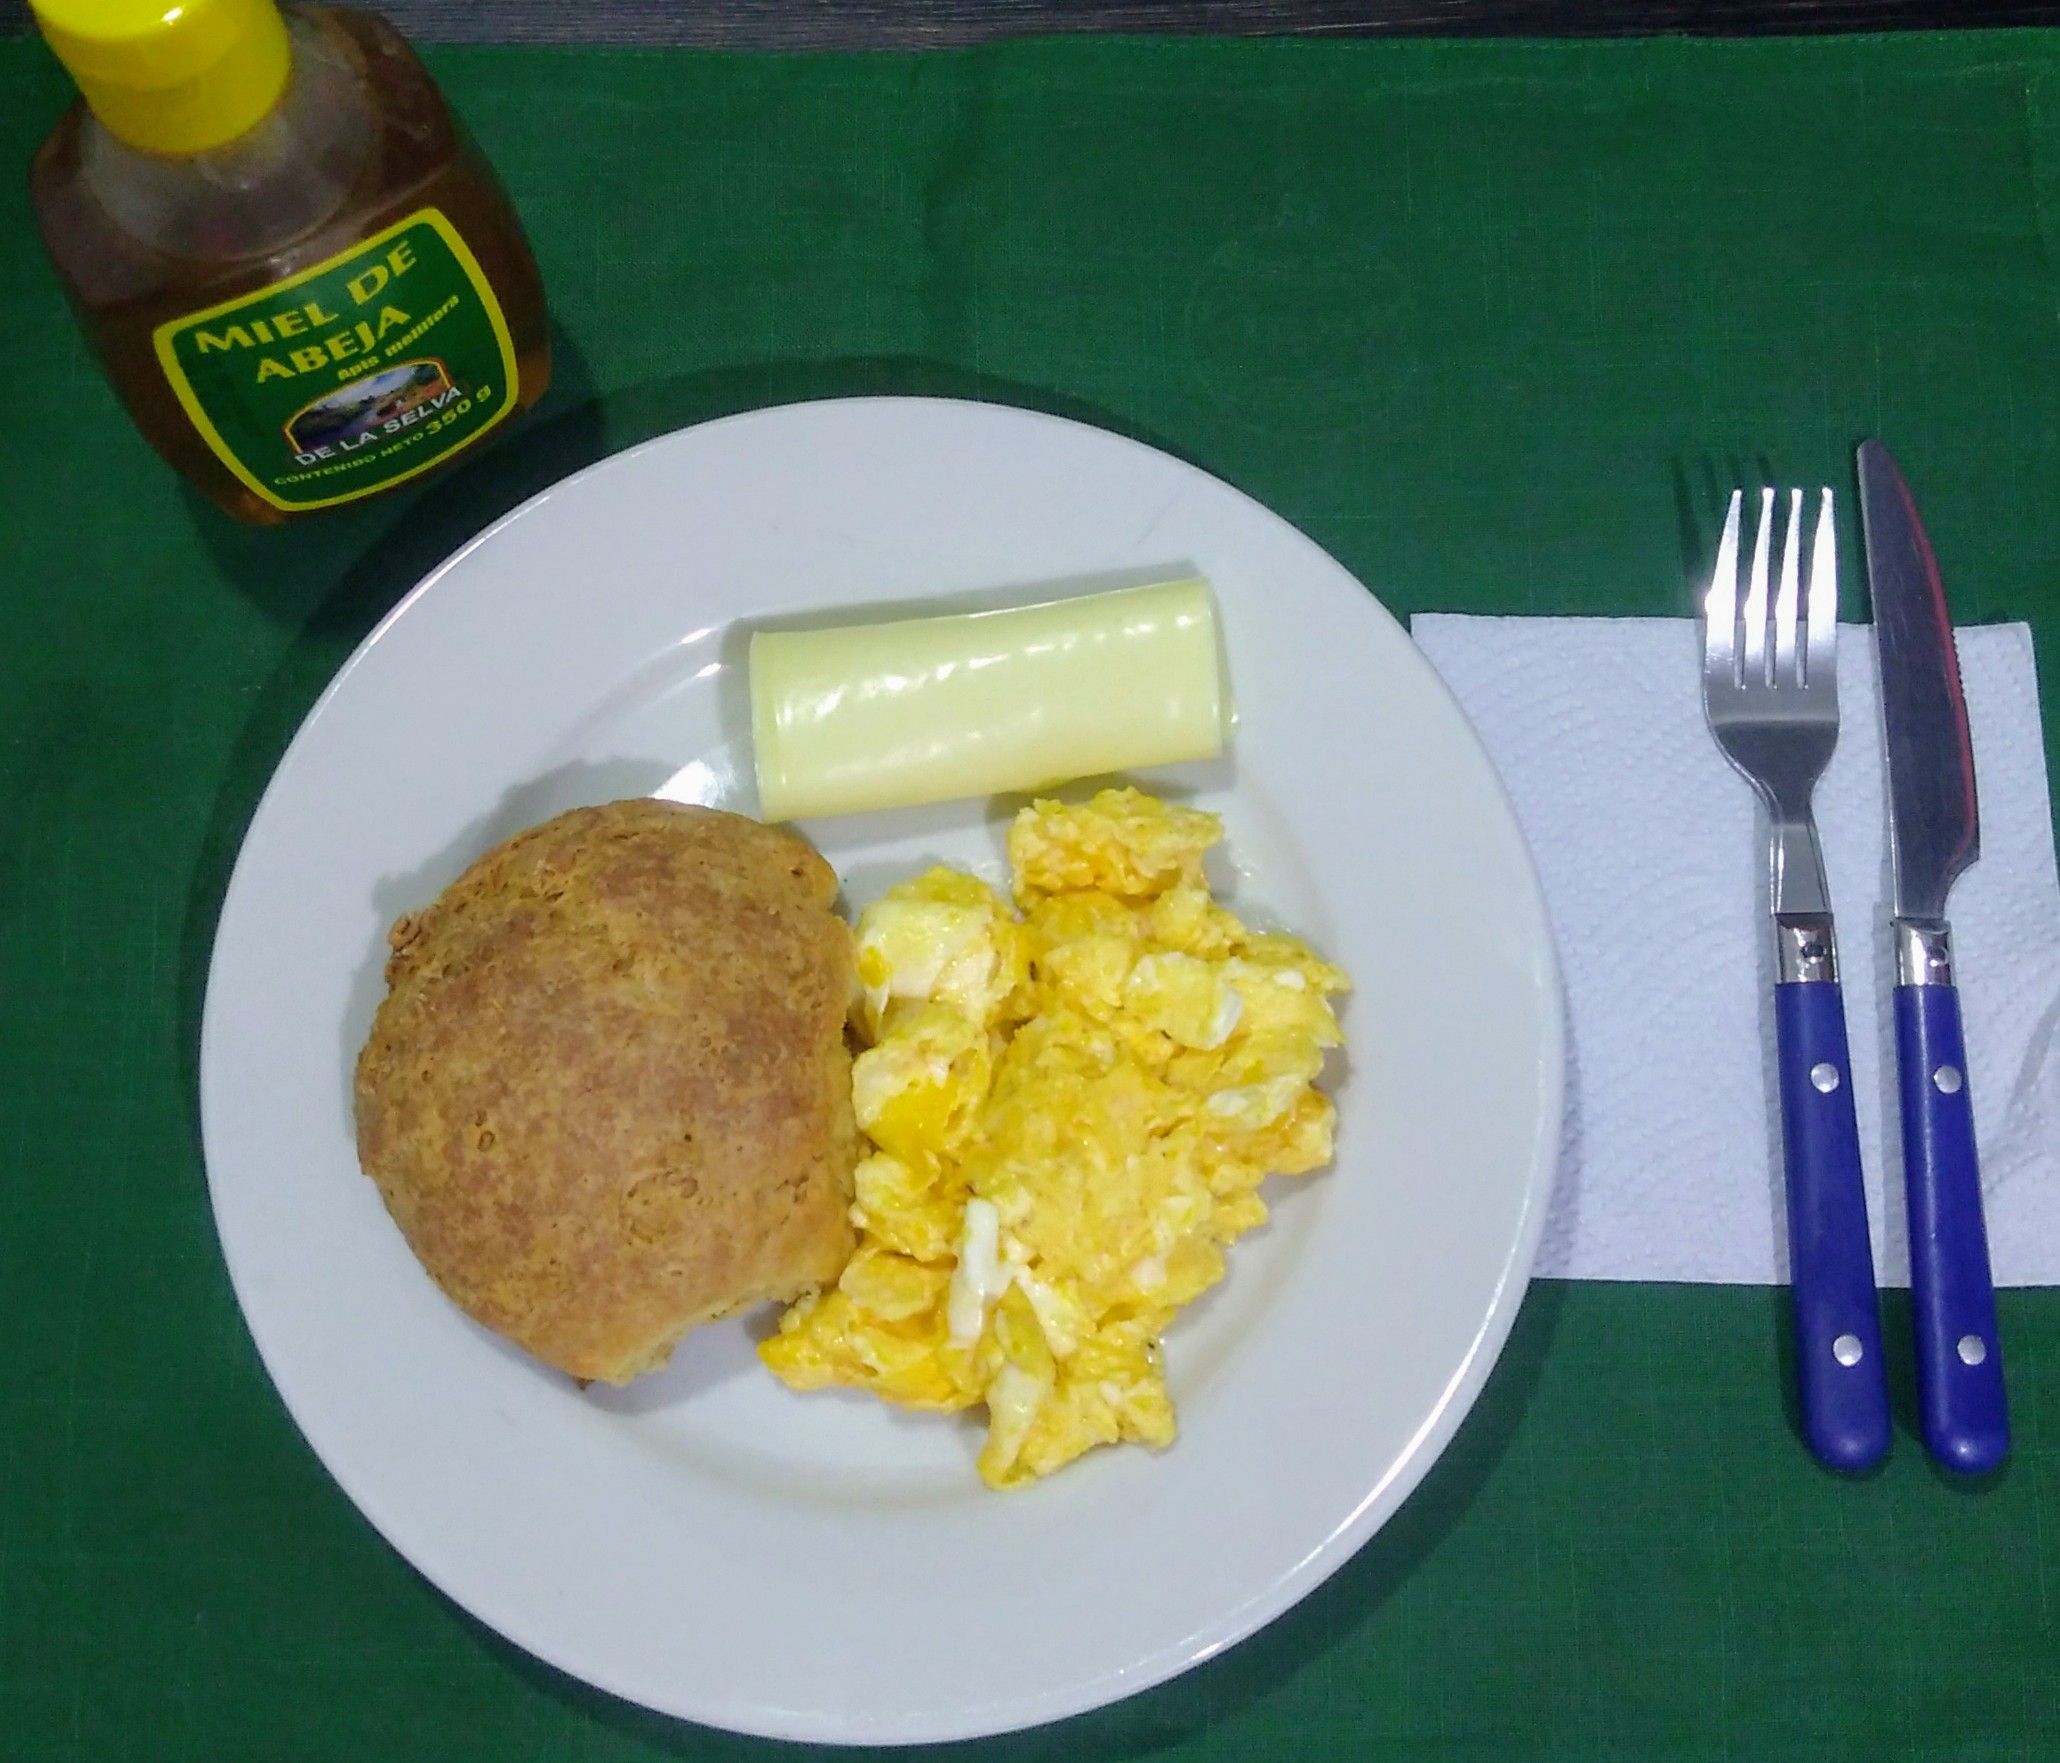 Honey, scone, cheese and scramble eggs